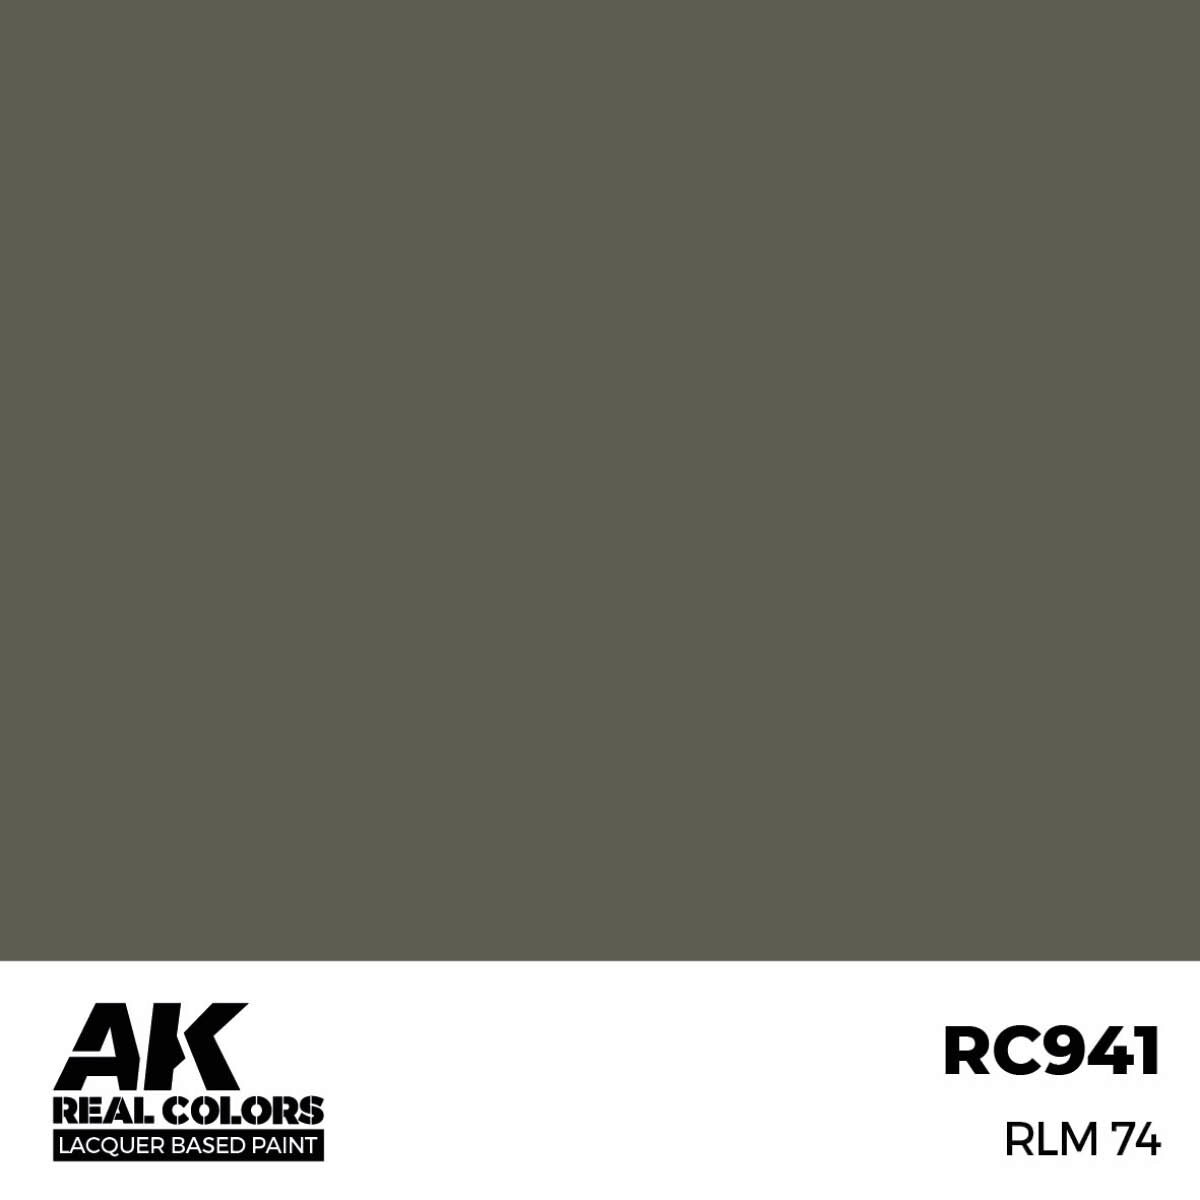 AK RC941 Real Colors RLM 74 17 ml.